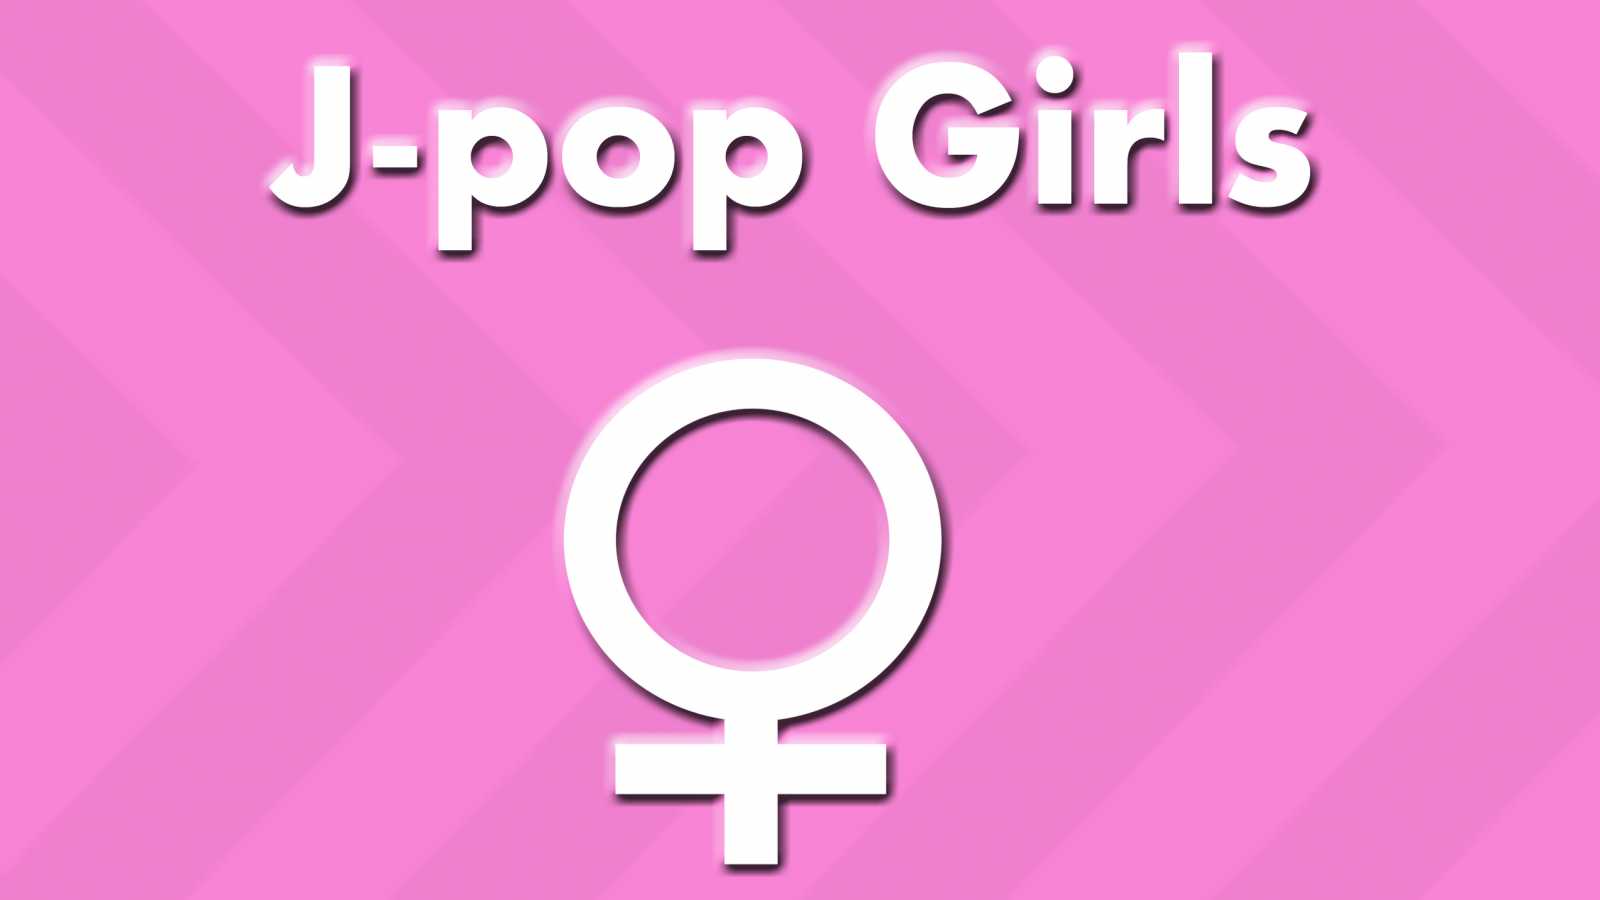 Notre playlist J-pop Girls © JaME